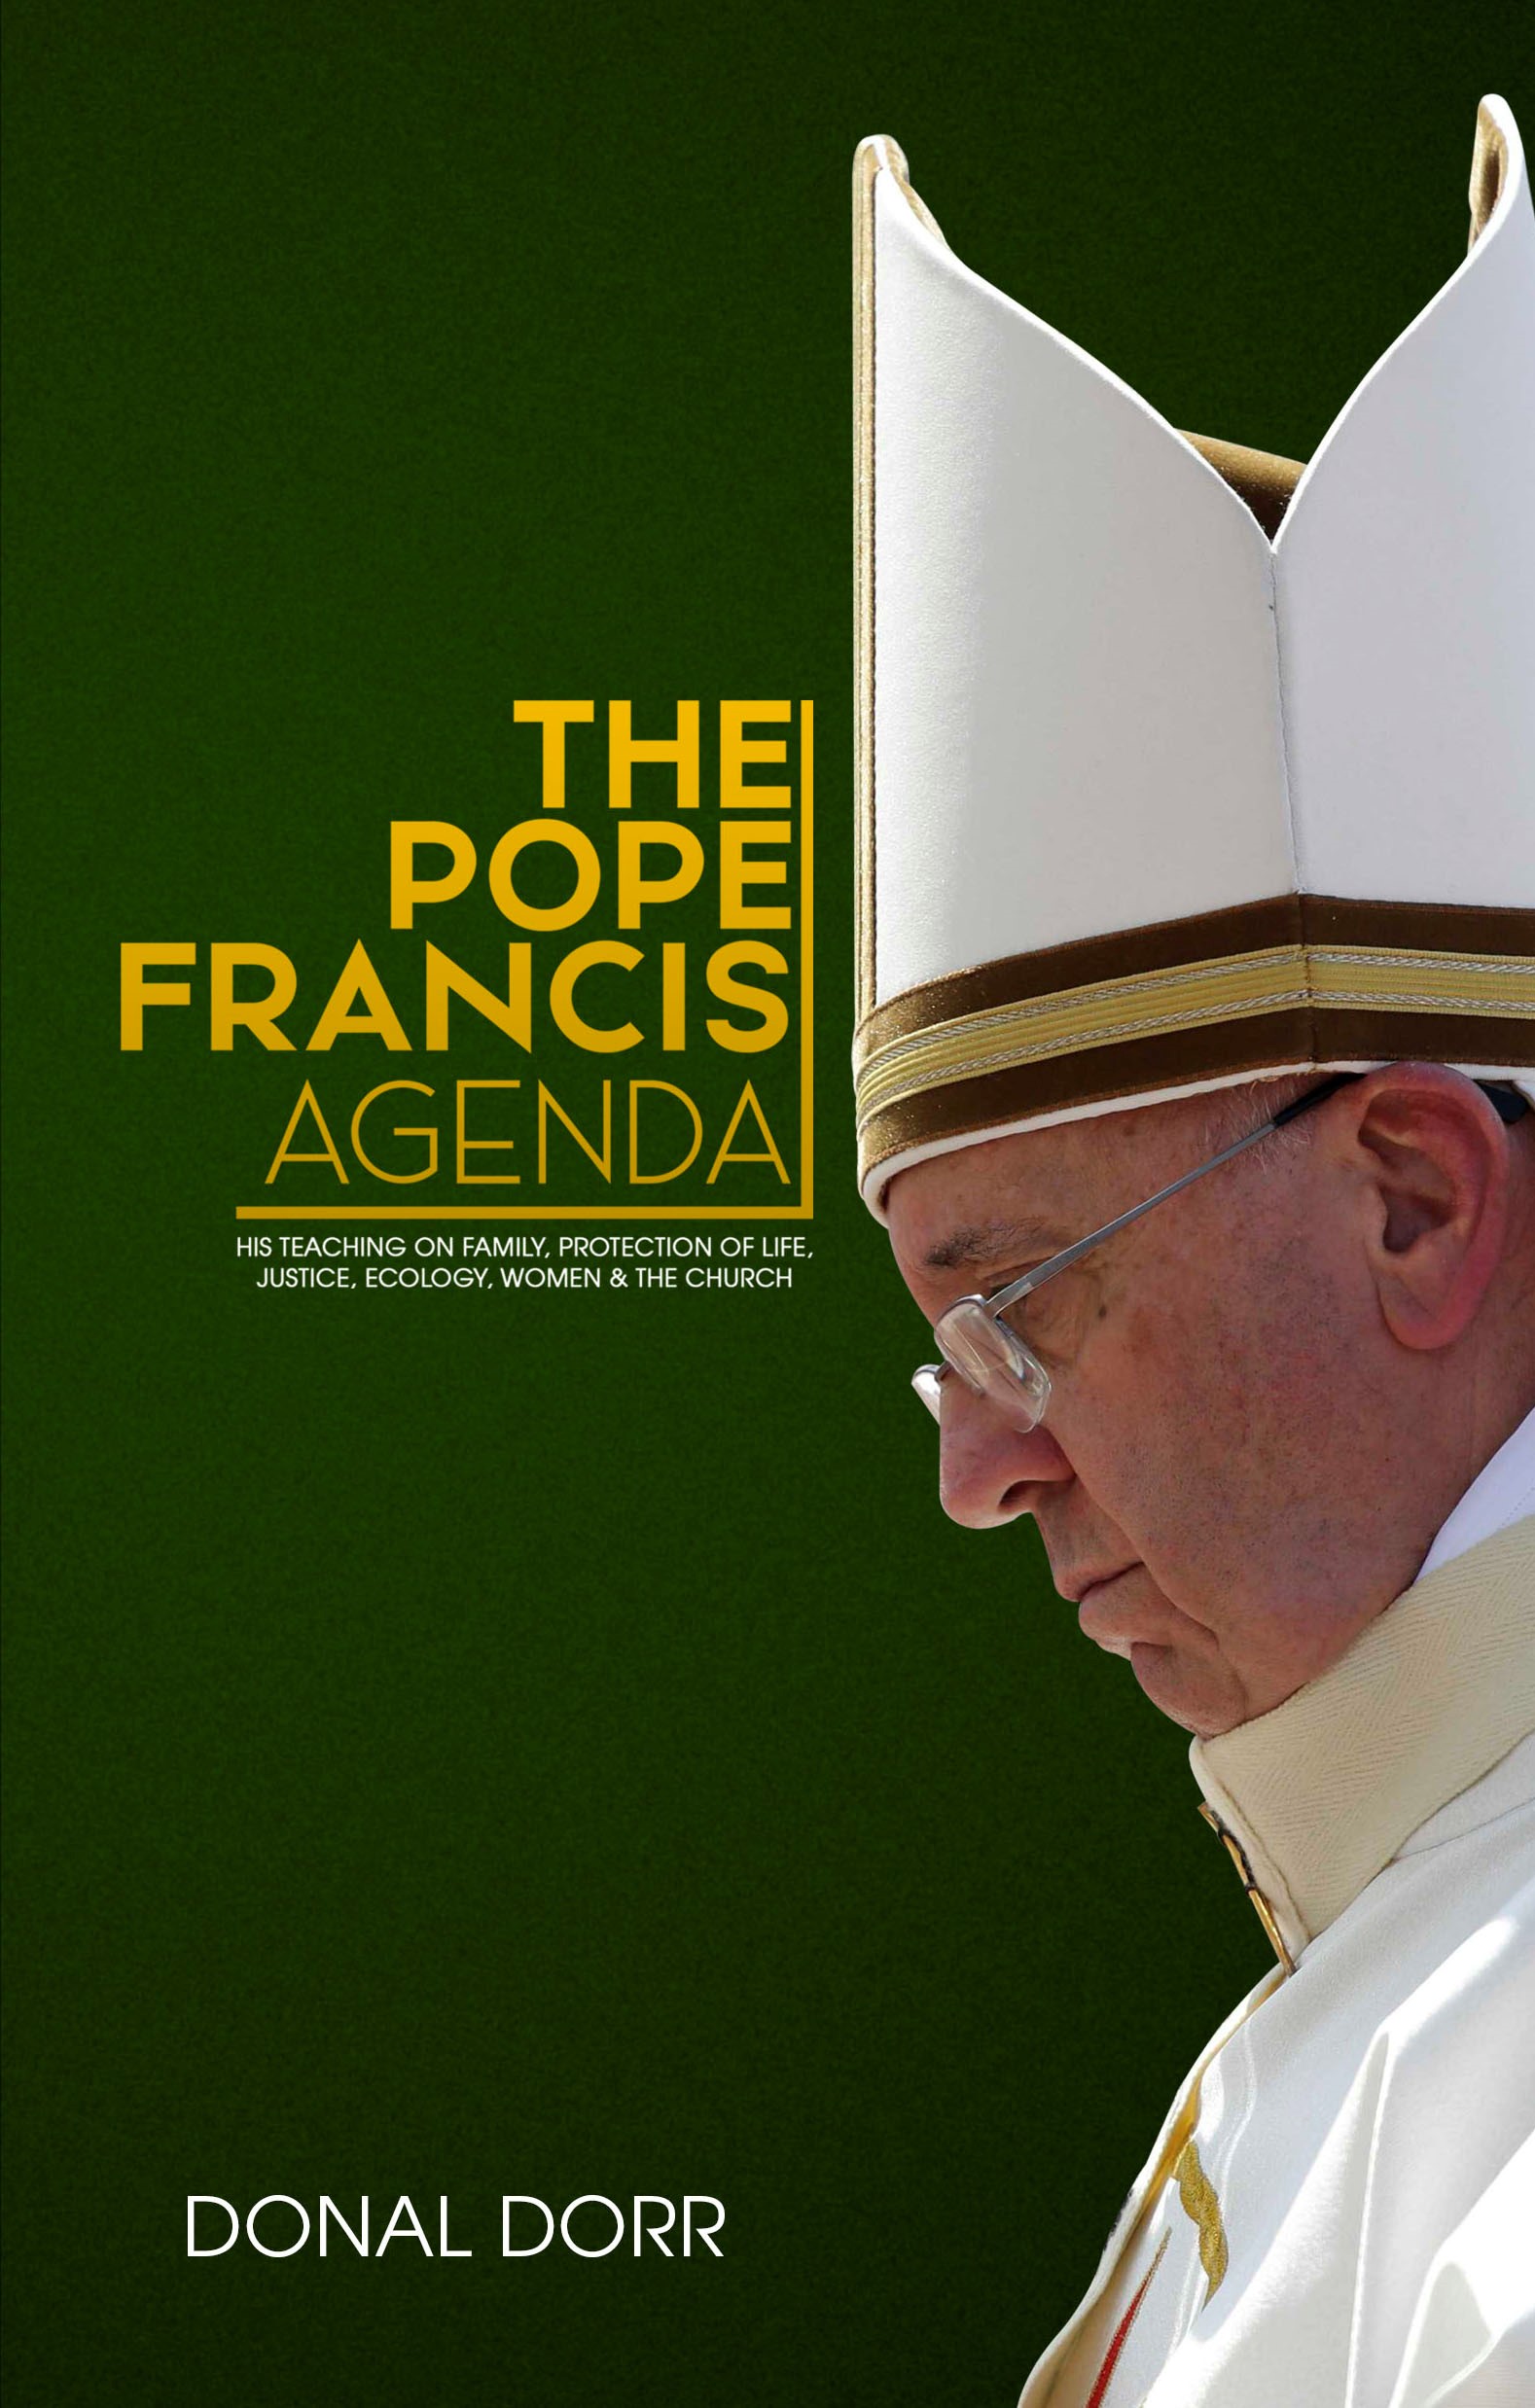 The Pope Francis Agenda